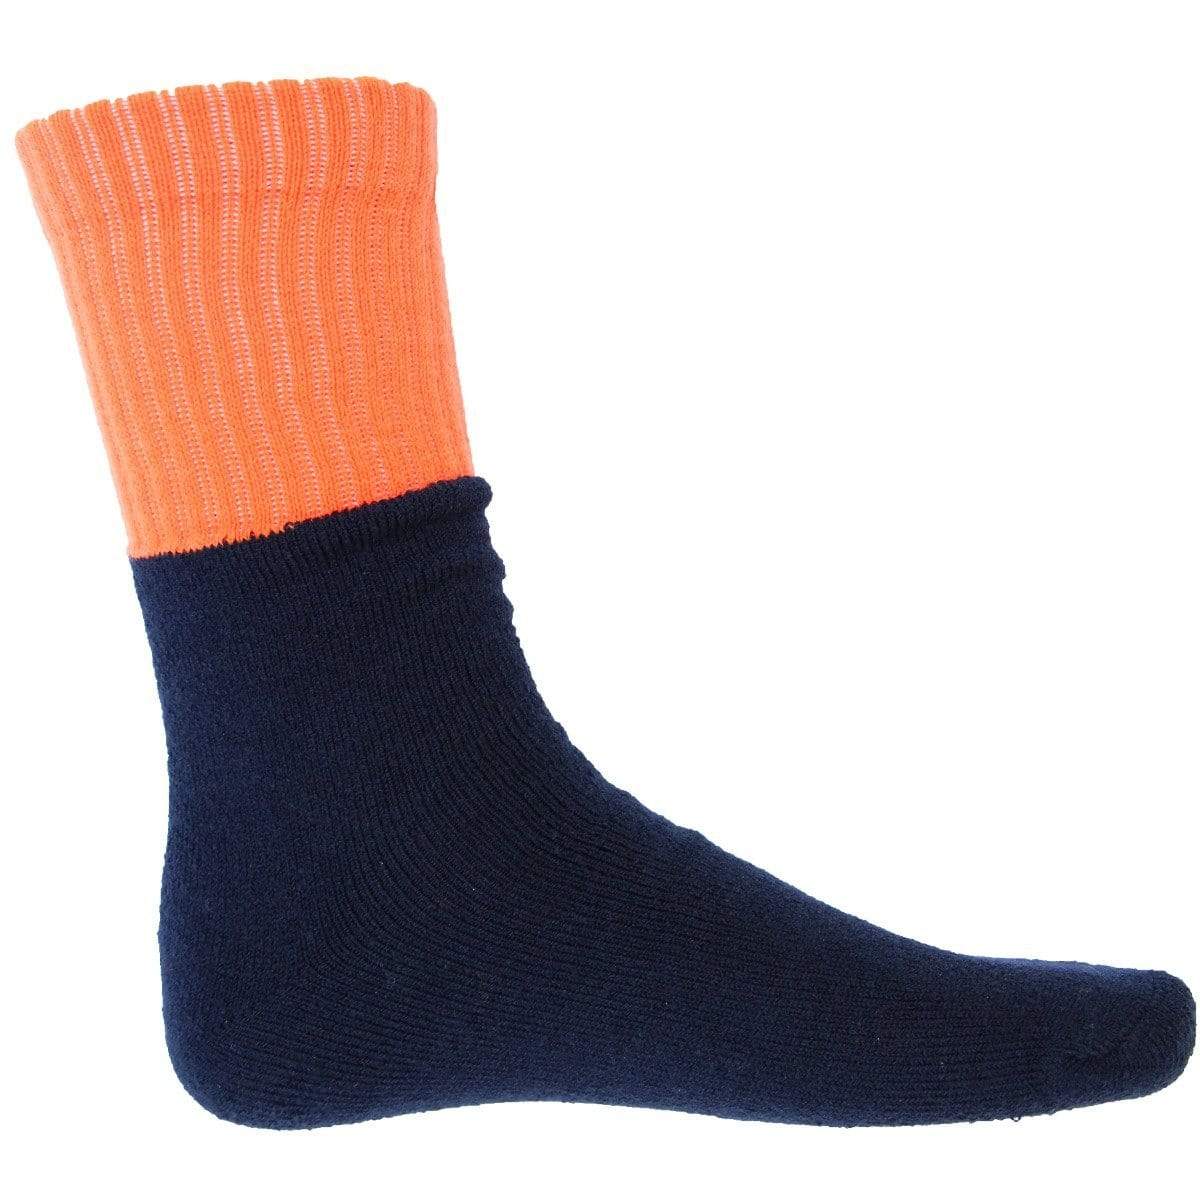 DNC Workwear Work Wear Orange/Navy / 2-5 DNC WORKWEAR Hi-Vis Two-Tone Acrylic 3 Pack Work Socks S123